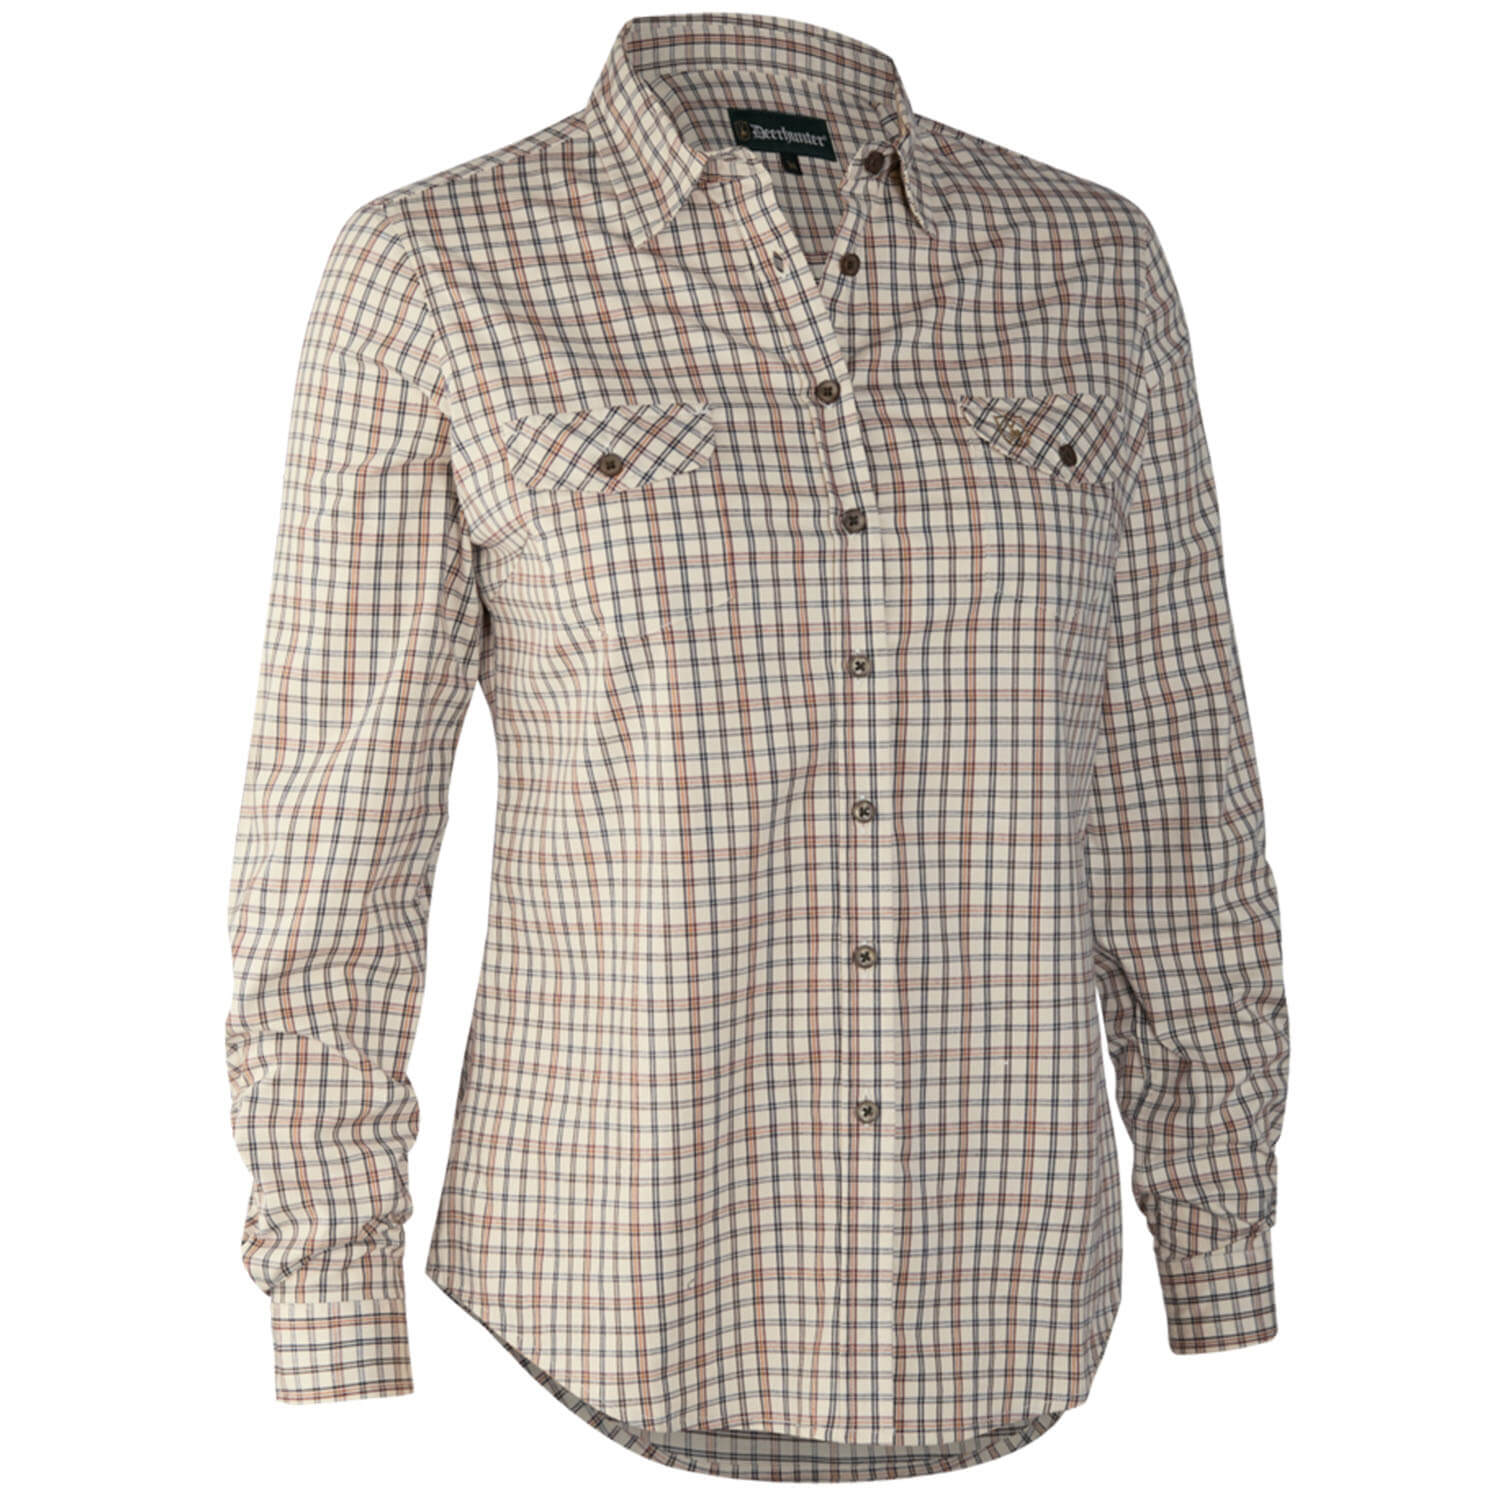  Deerhunter Lady Harper jachthemd (Groene ruit) - Blouses & shirts